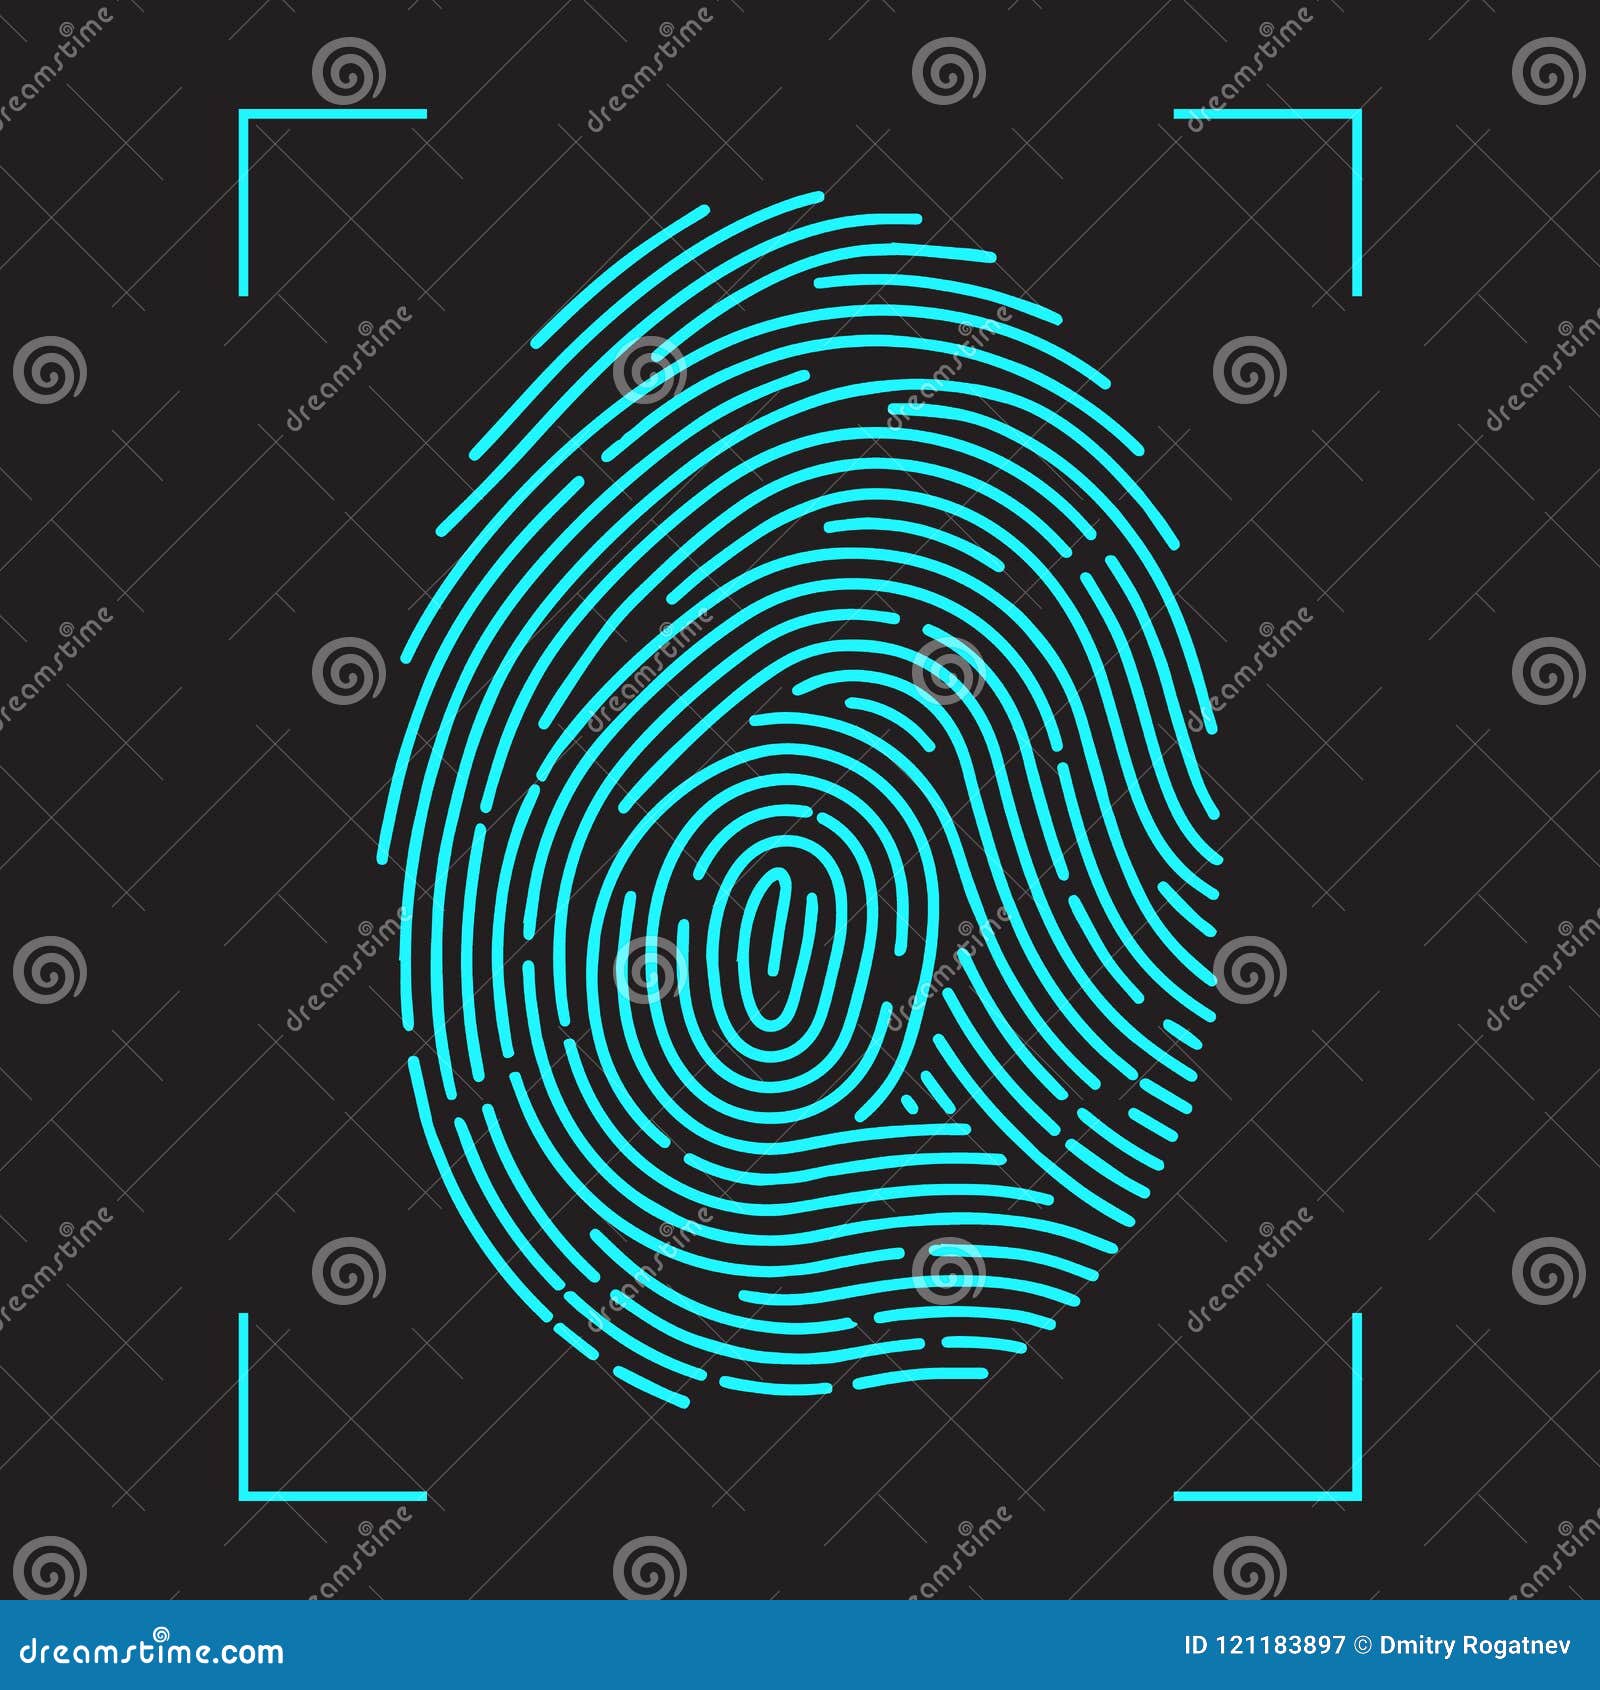 finger-print scanning identification system.